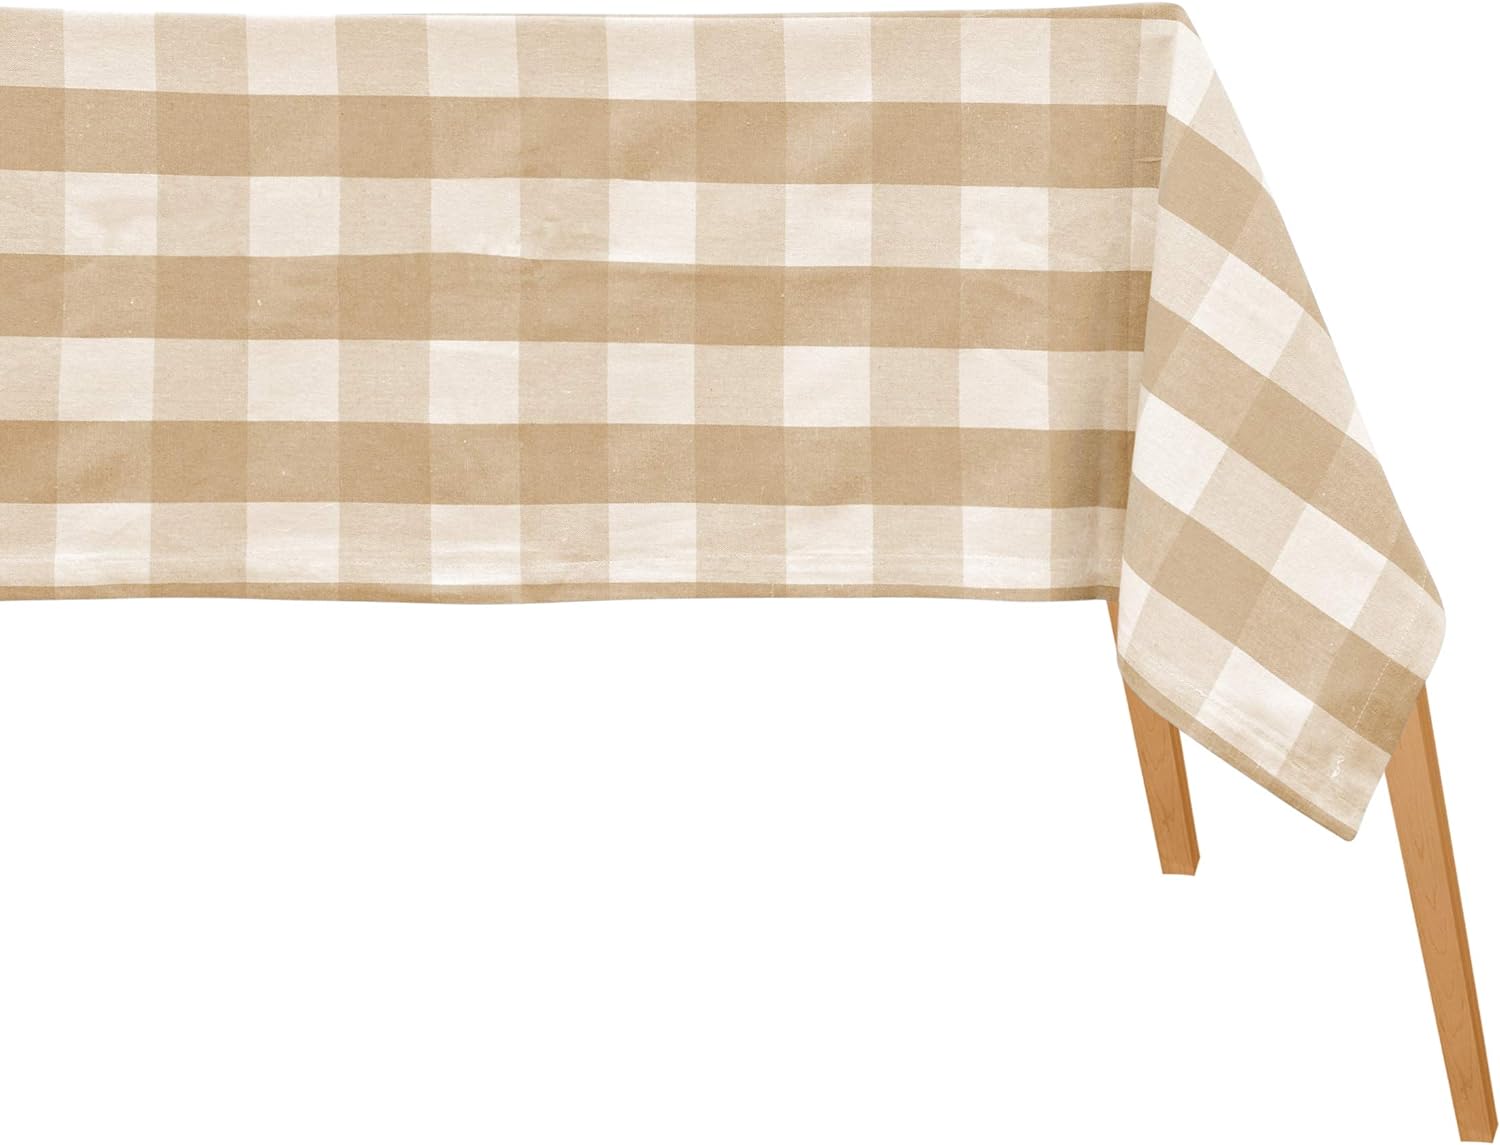 Plaid Tablecloth